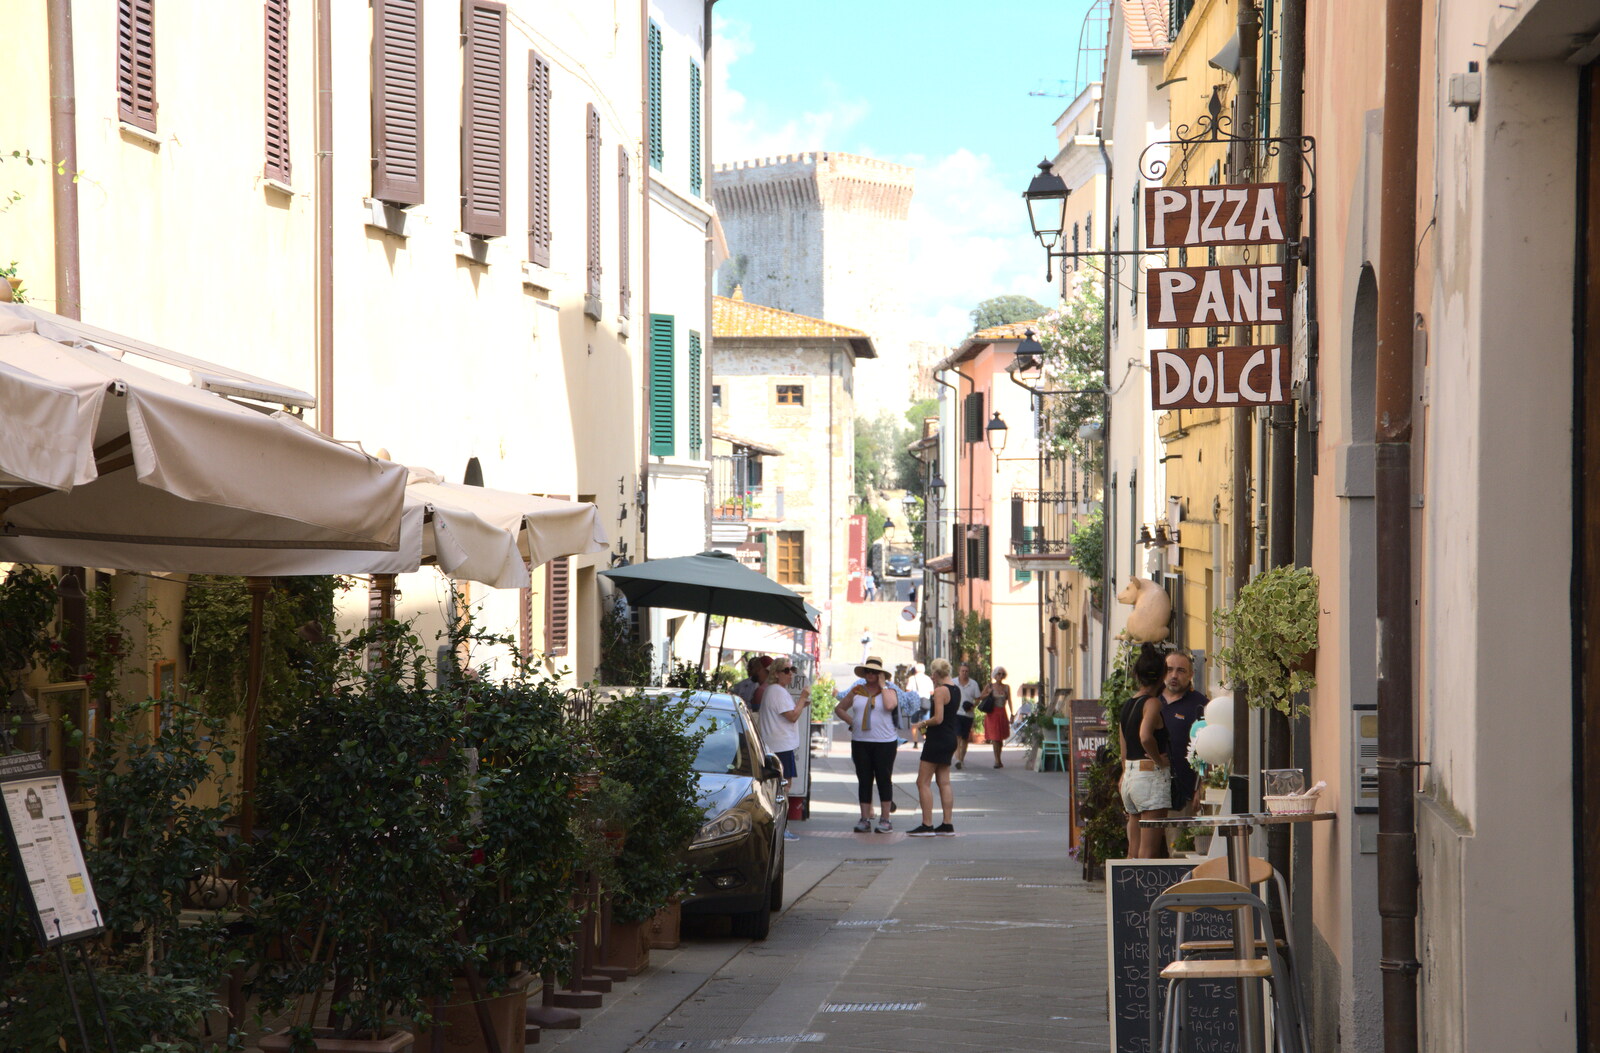 Castiglio Del Lago and Santuario della Verna, Umbria and Tuscany, Italy - 1st September 2022: The holy trinity: pizza, pane and dolci